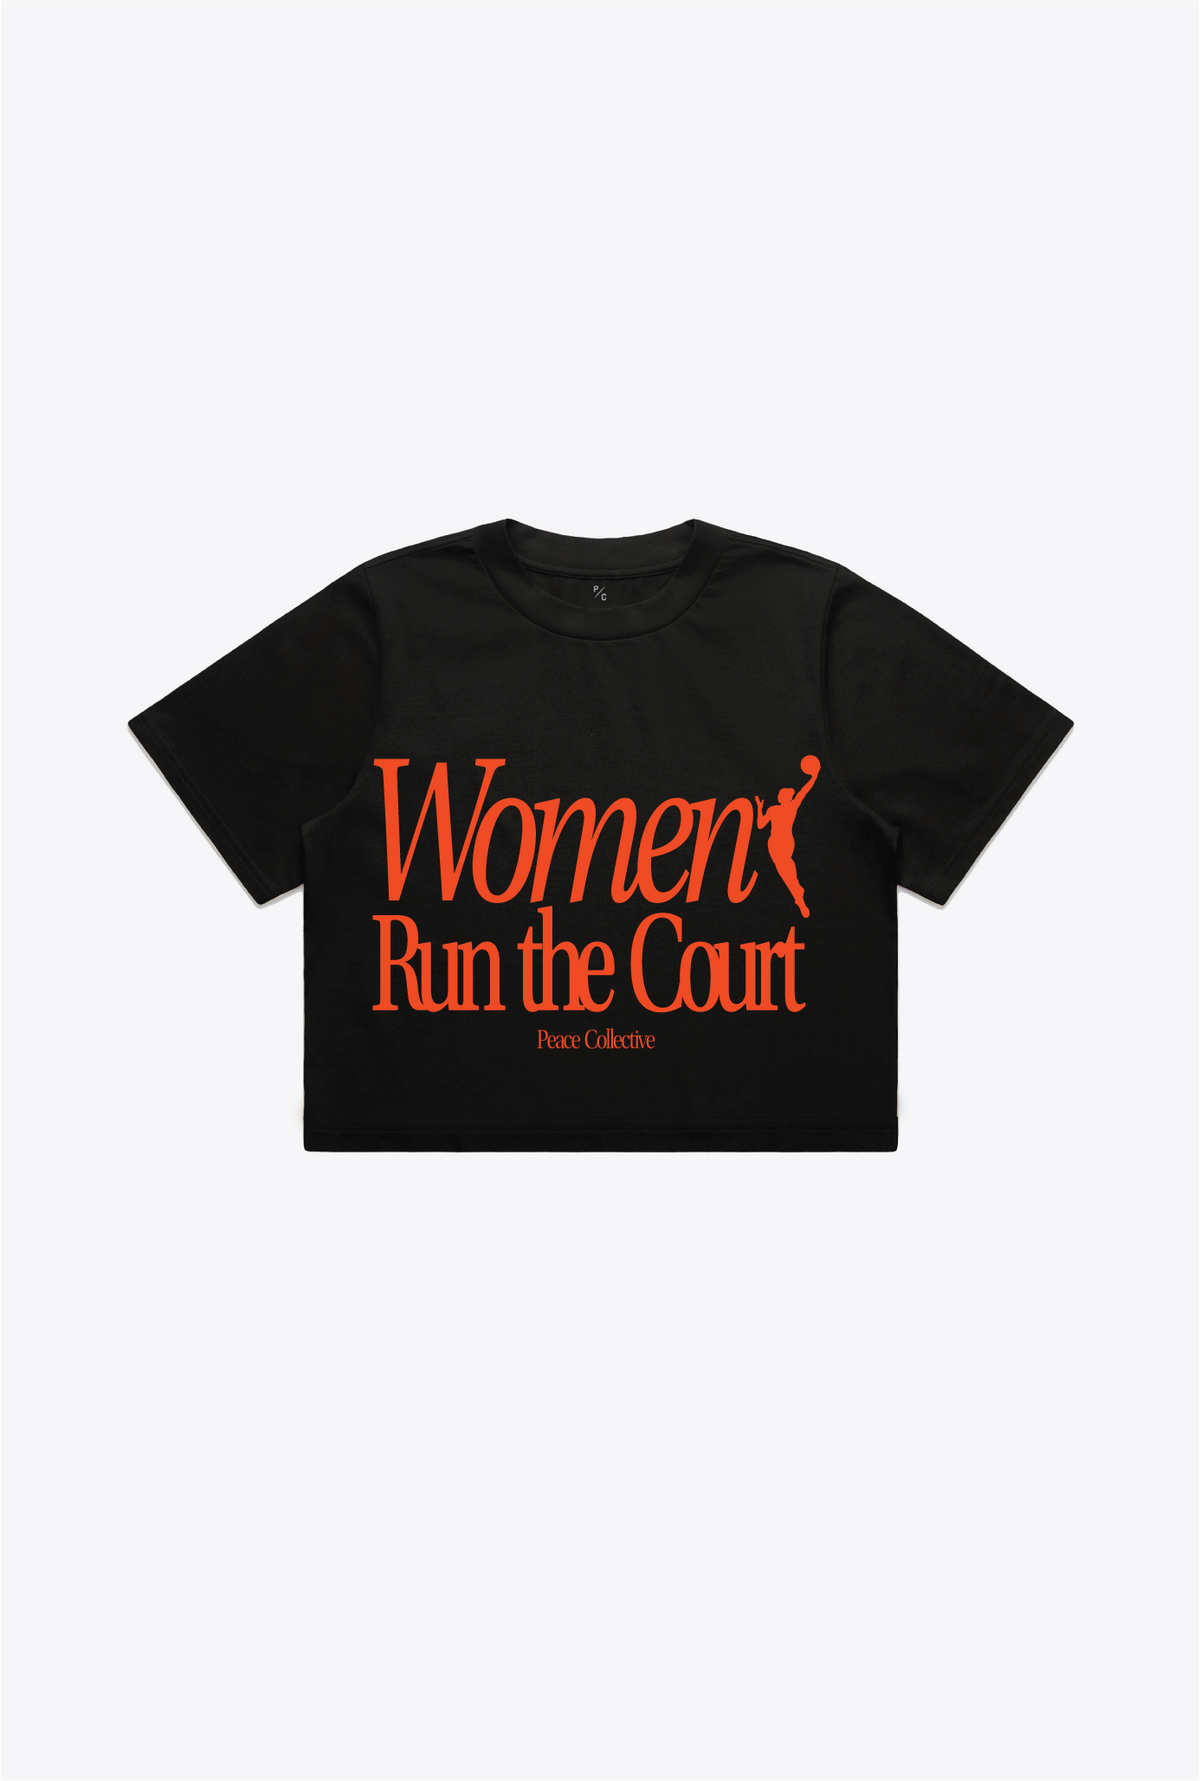 Women Run the Court Cropped Shirt - Black